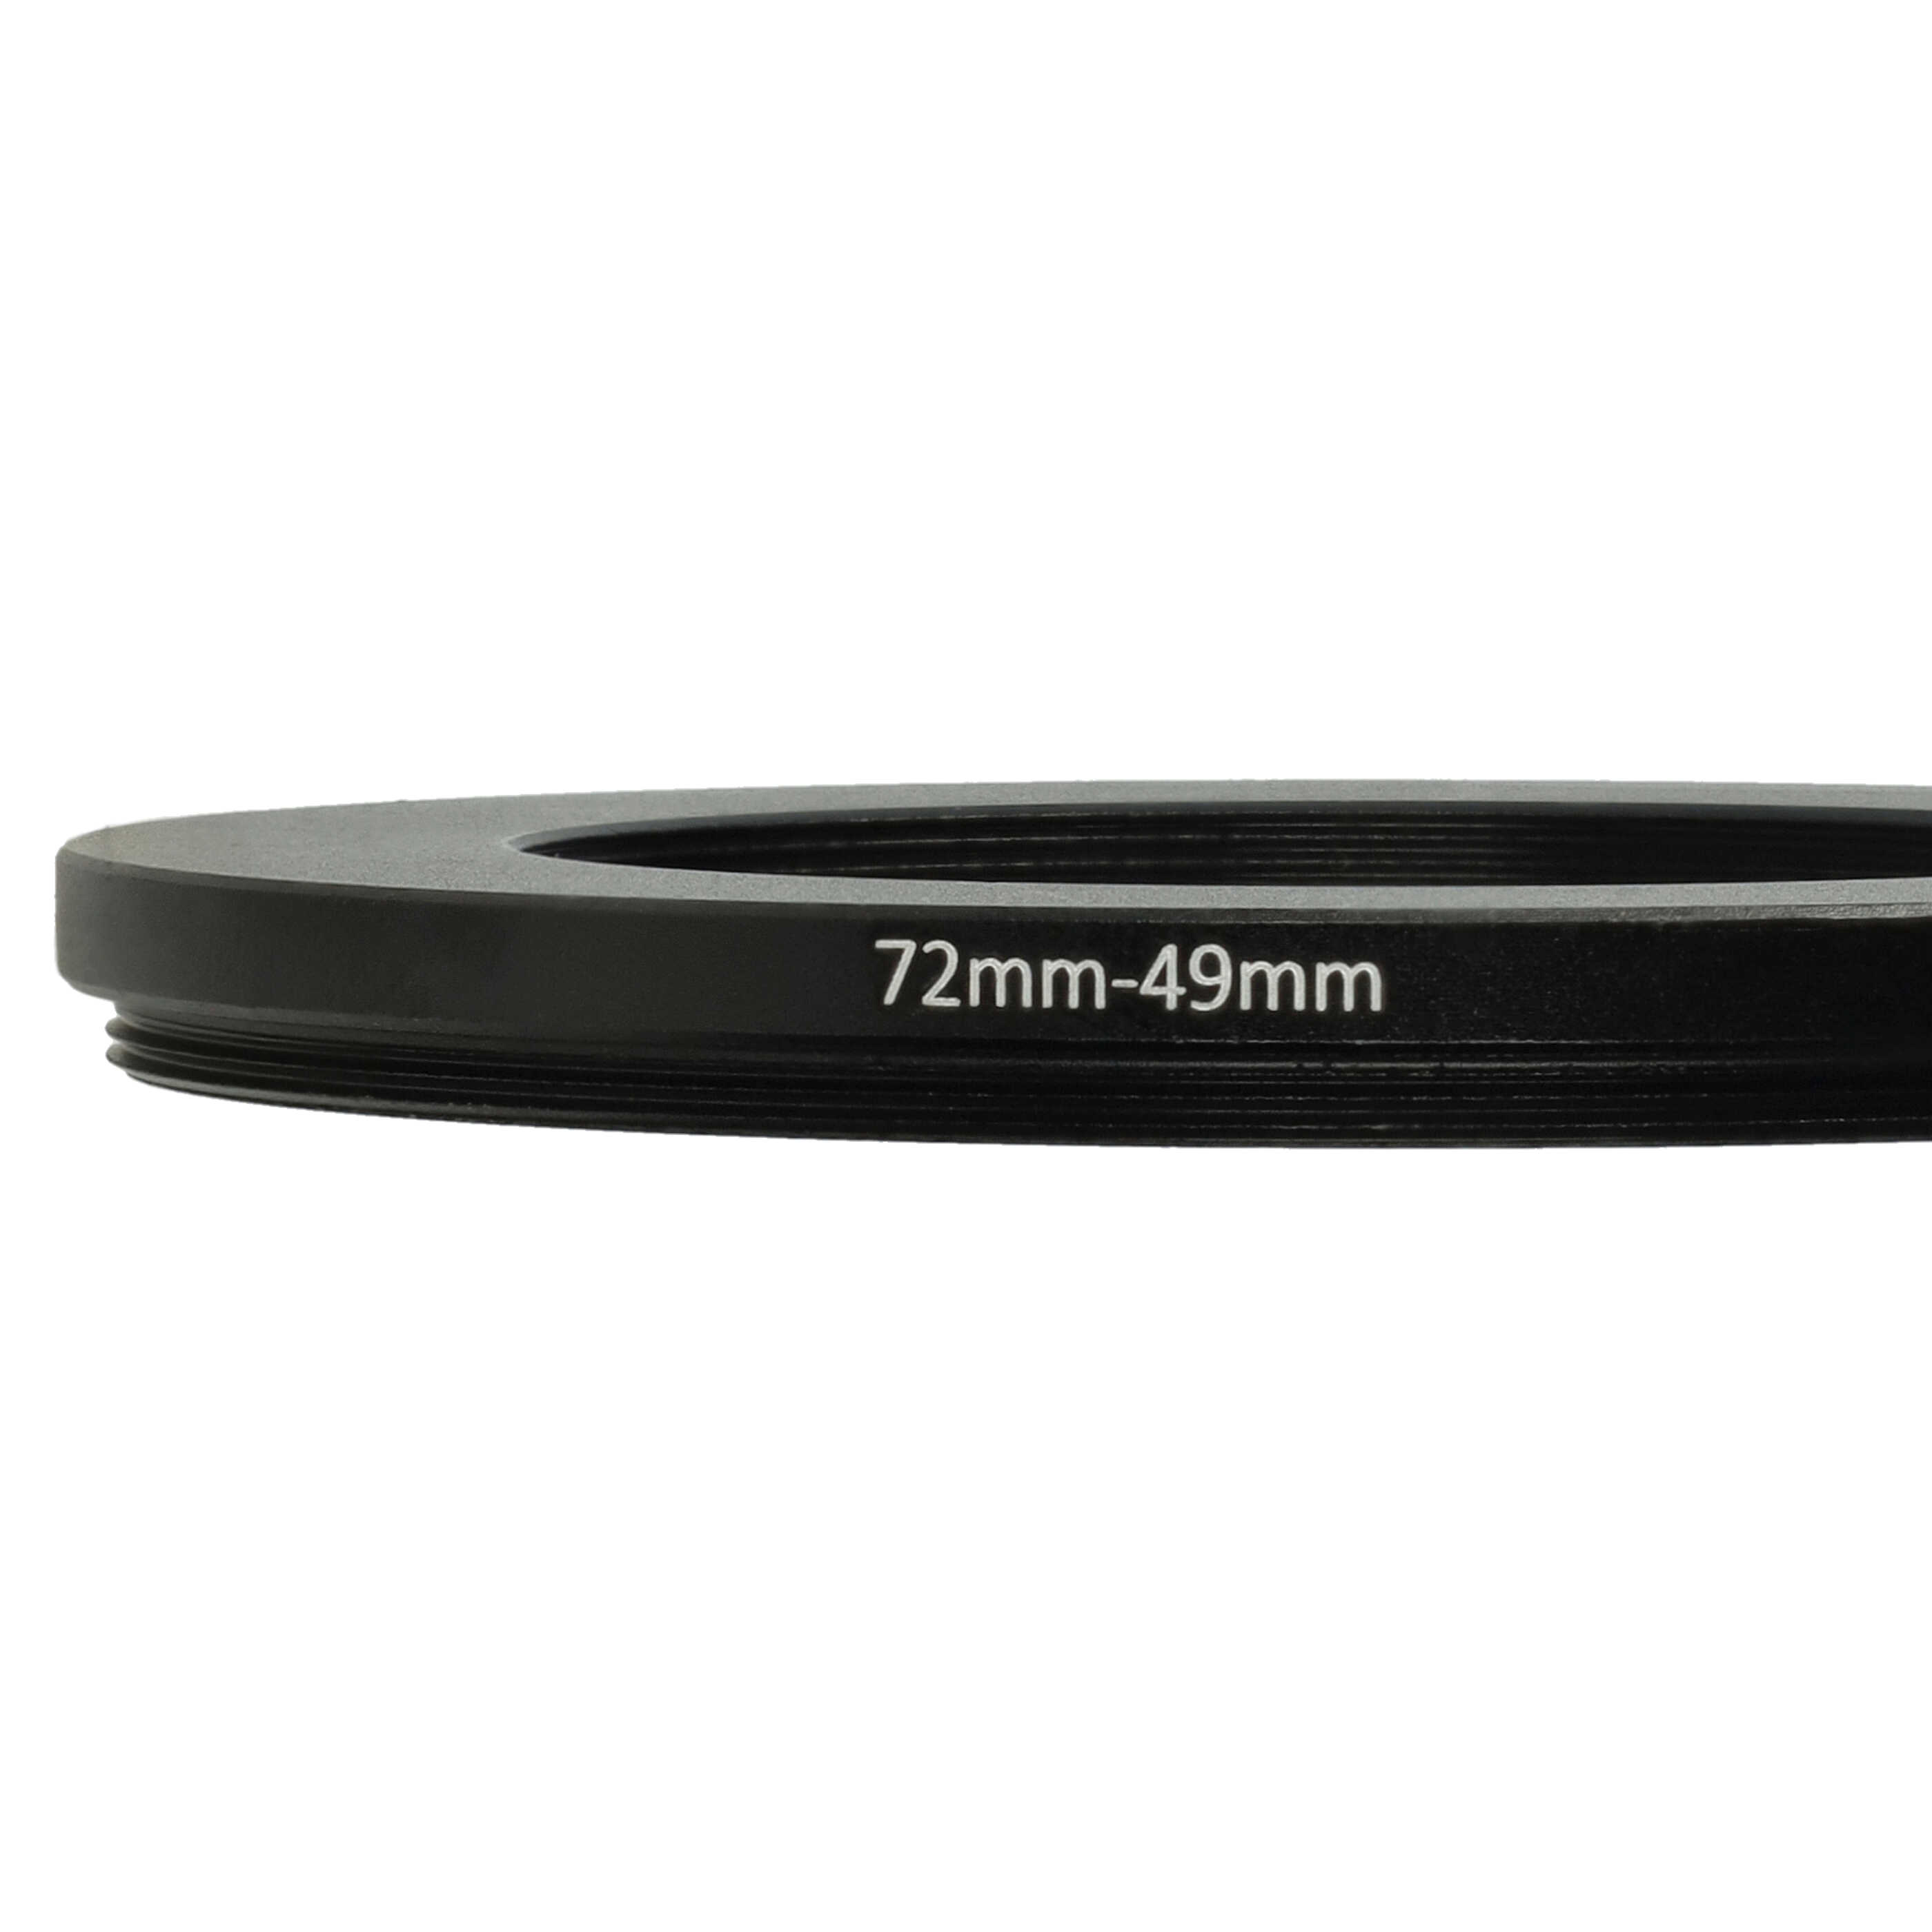 Anillo adaptador Step Down de 72 mm a 49 mm para diversos objetivos de cámara